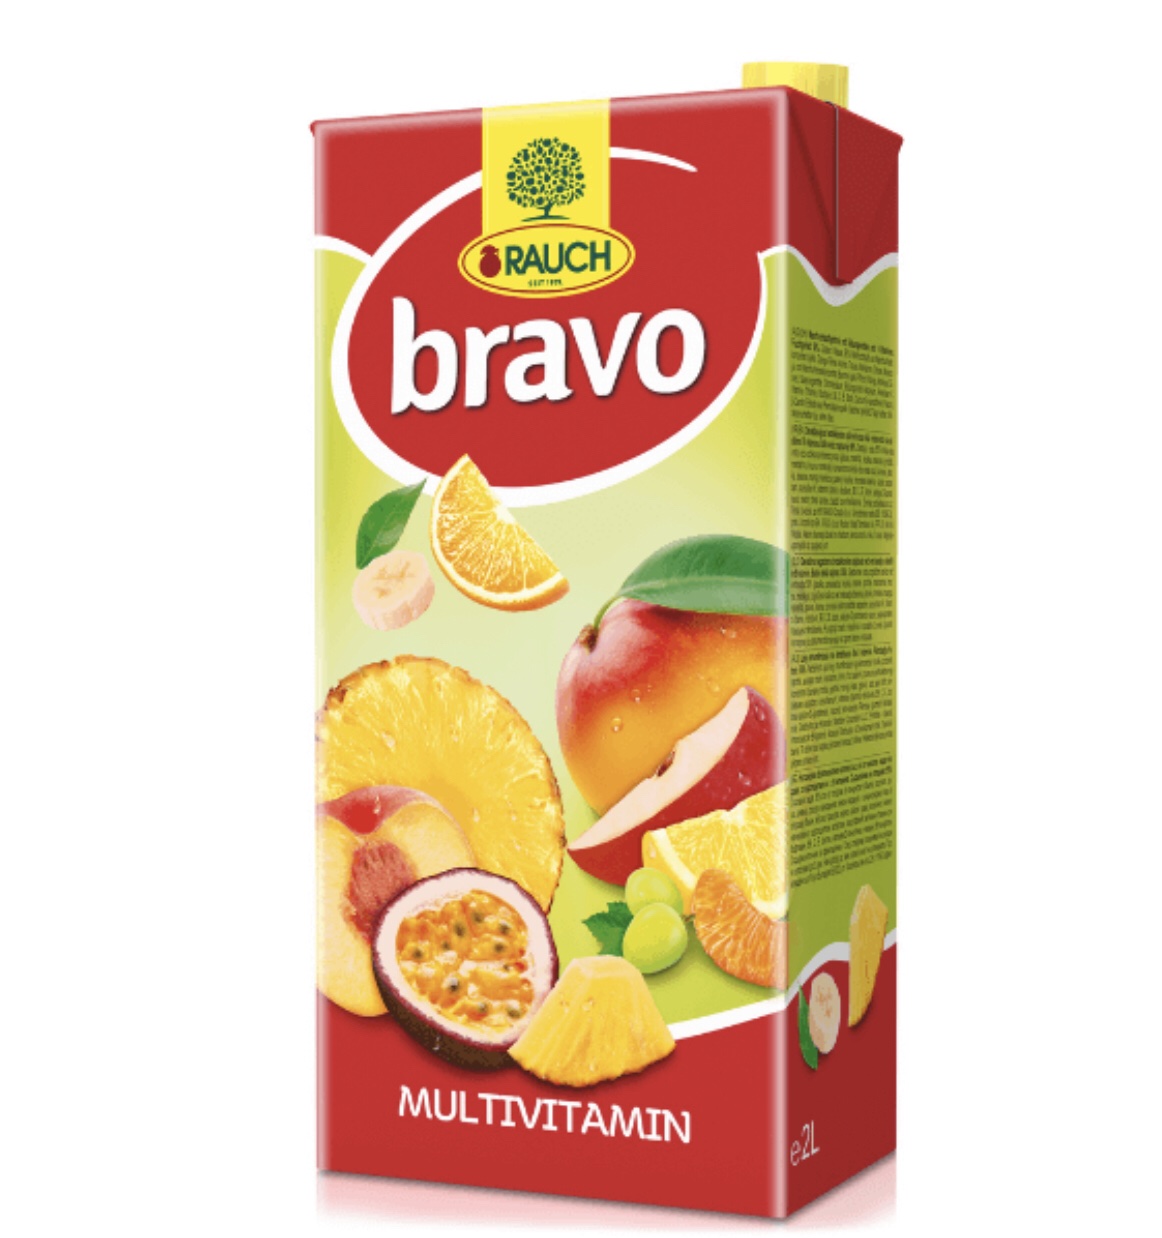 Bravo multivitamin 2L - Fresh Market